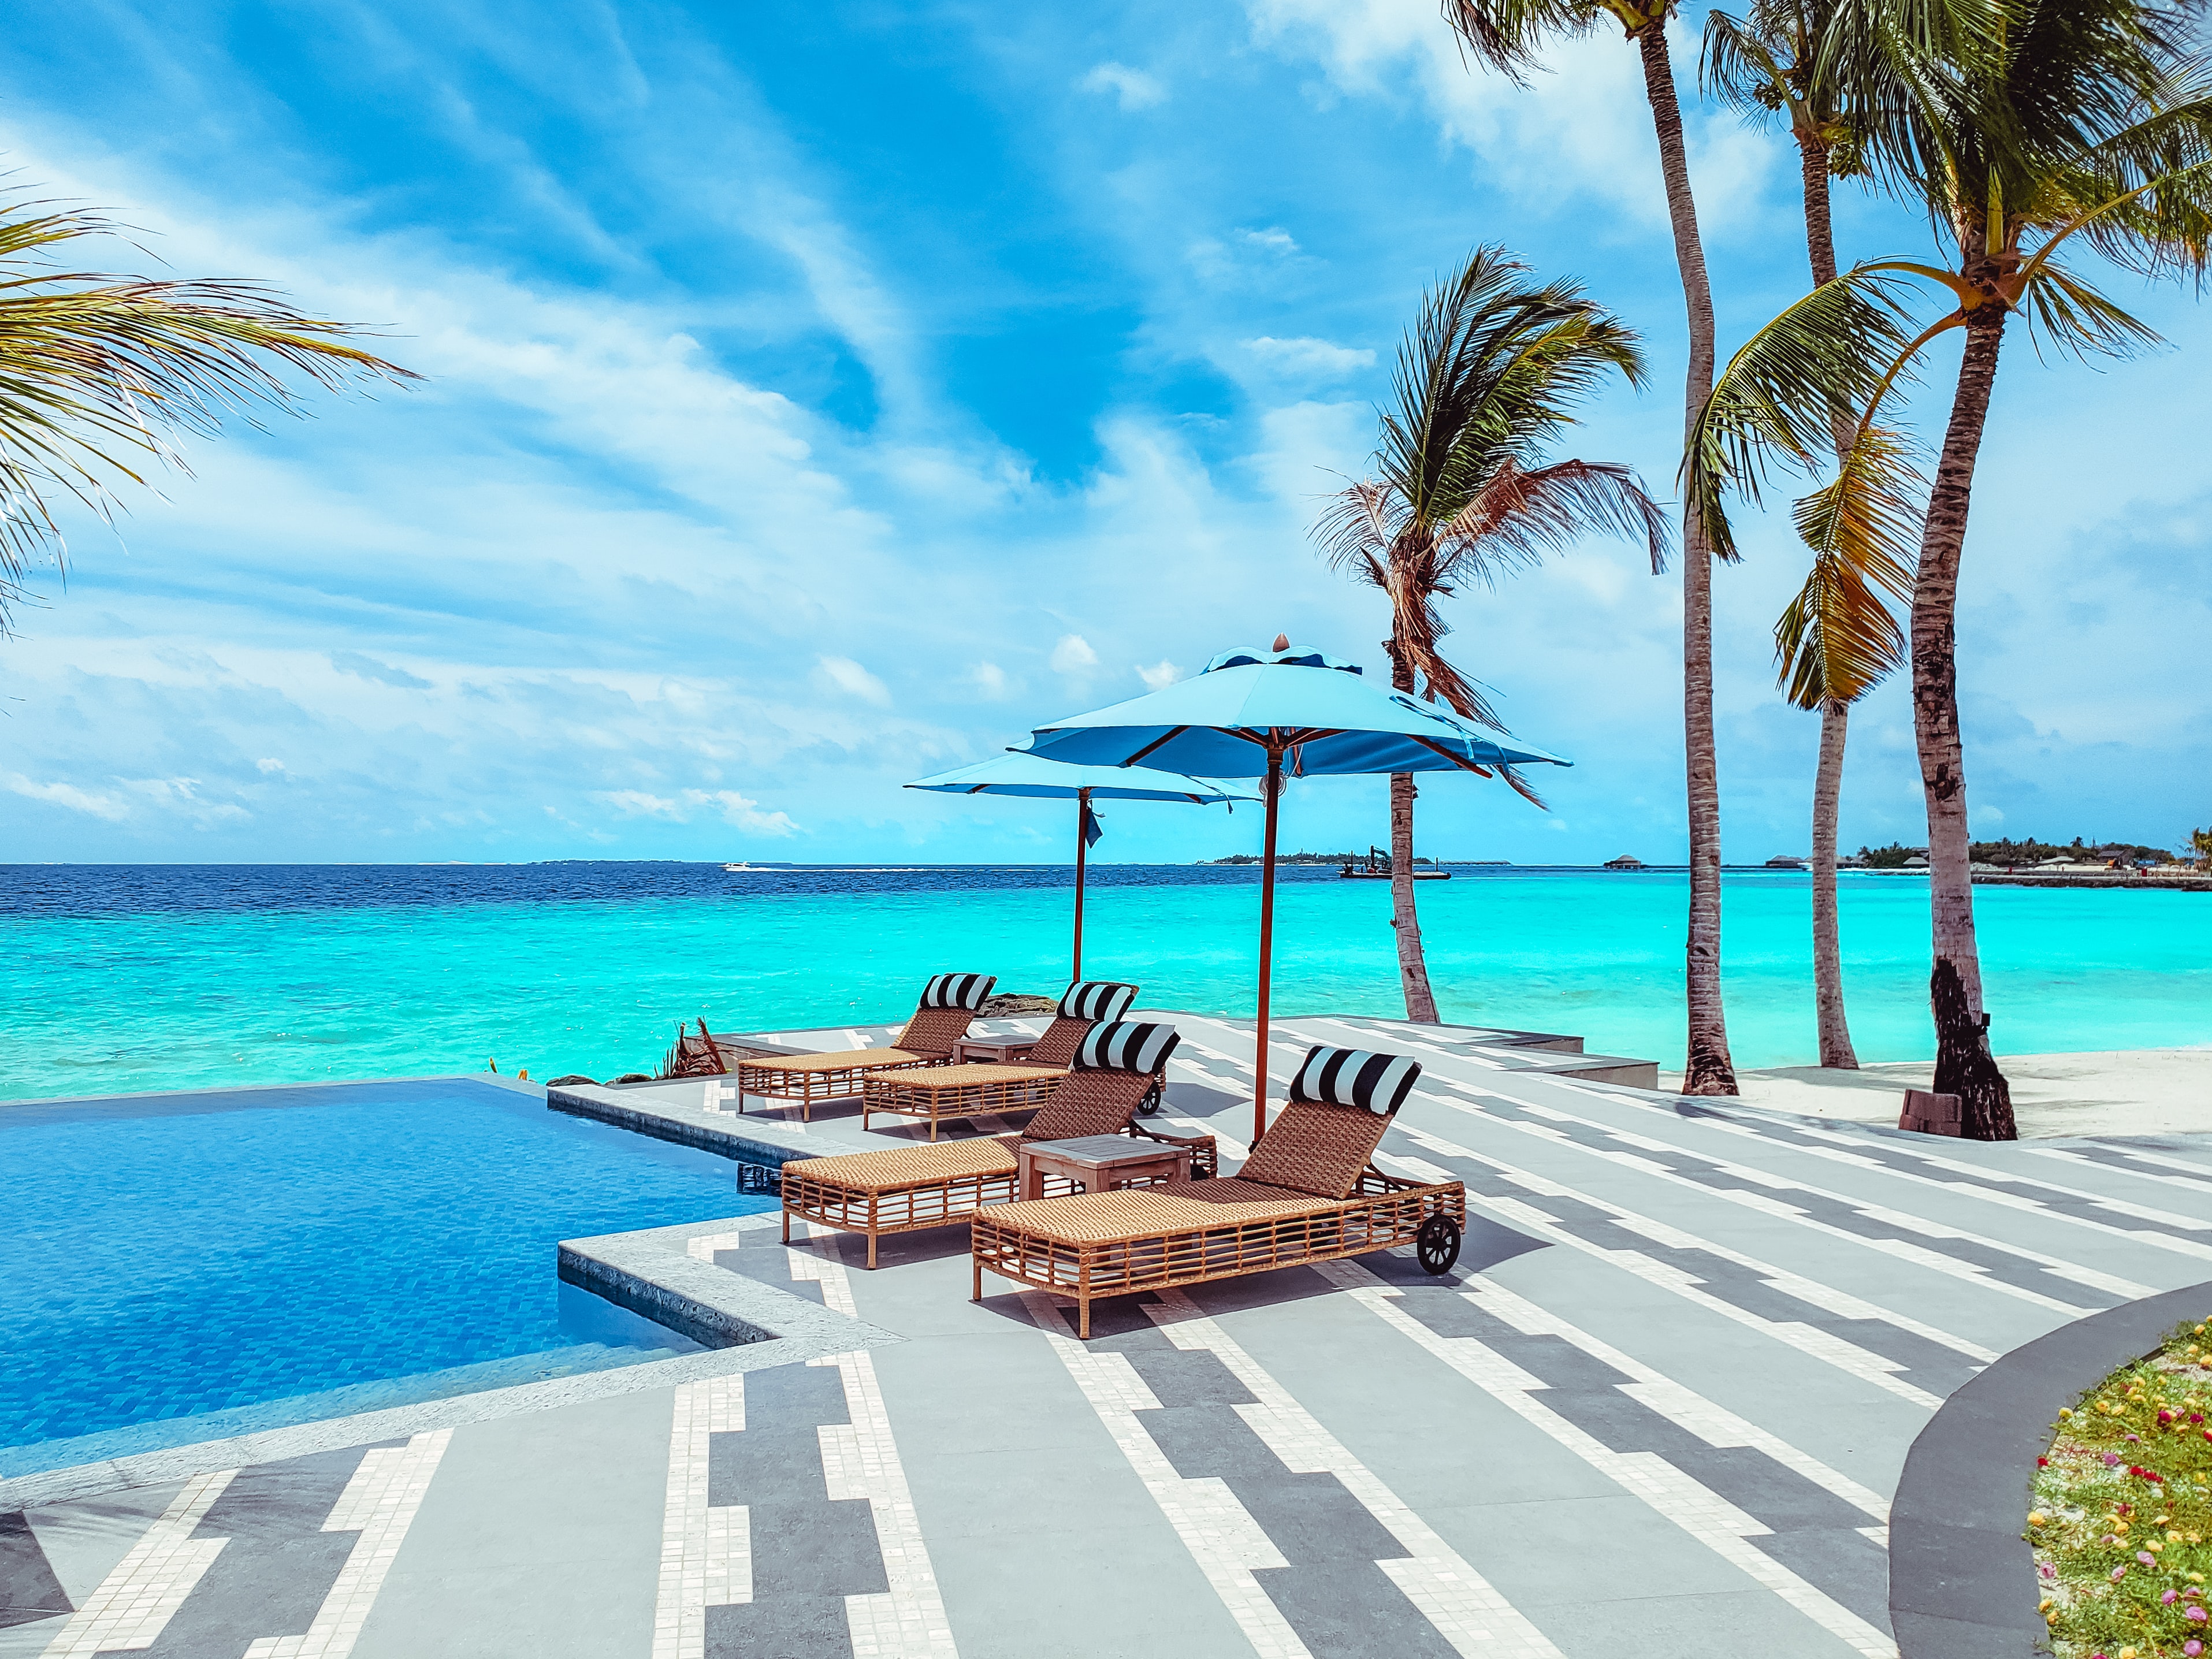 sun lounger, palms, miscellanea, miscellaneous, ocean, relaxation, rest, deck chair, umbrella